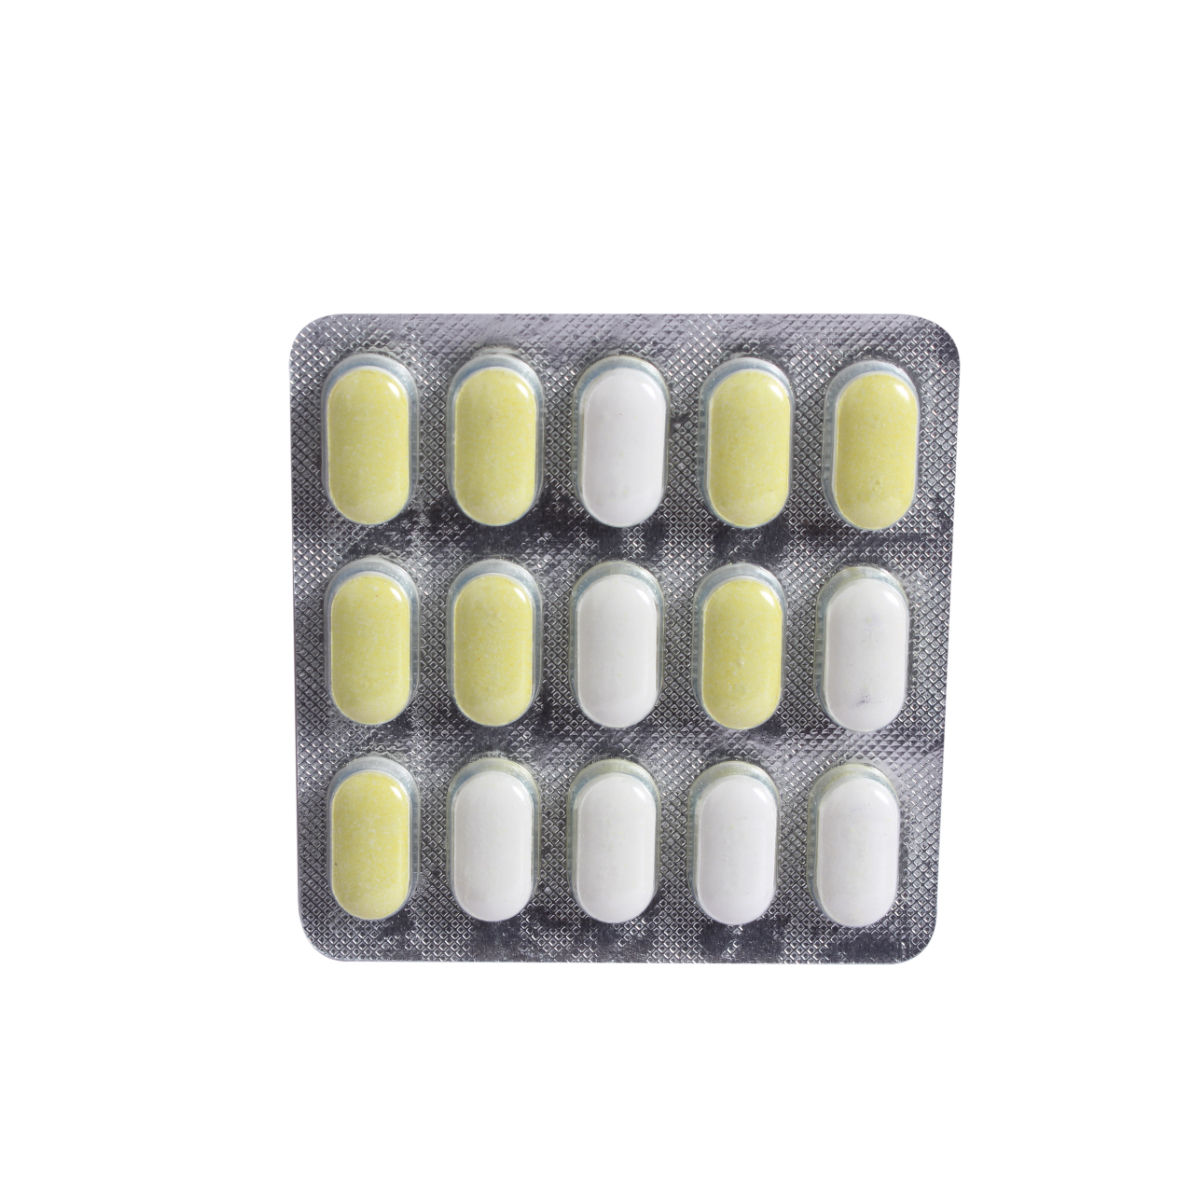 Buy K-Glim-M 2 mg Tablet 10's Online